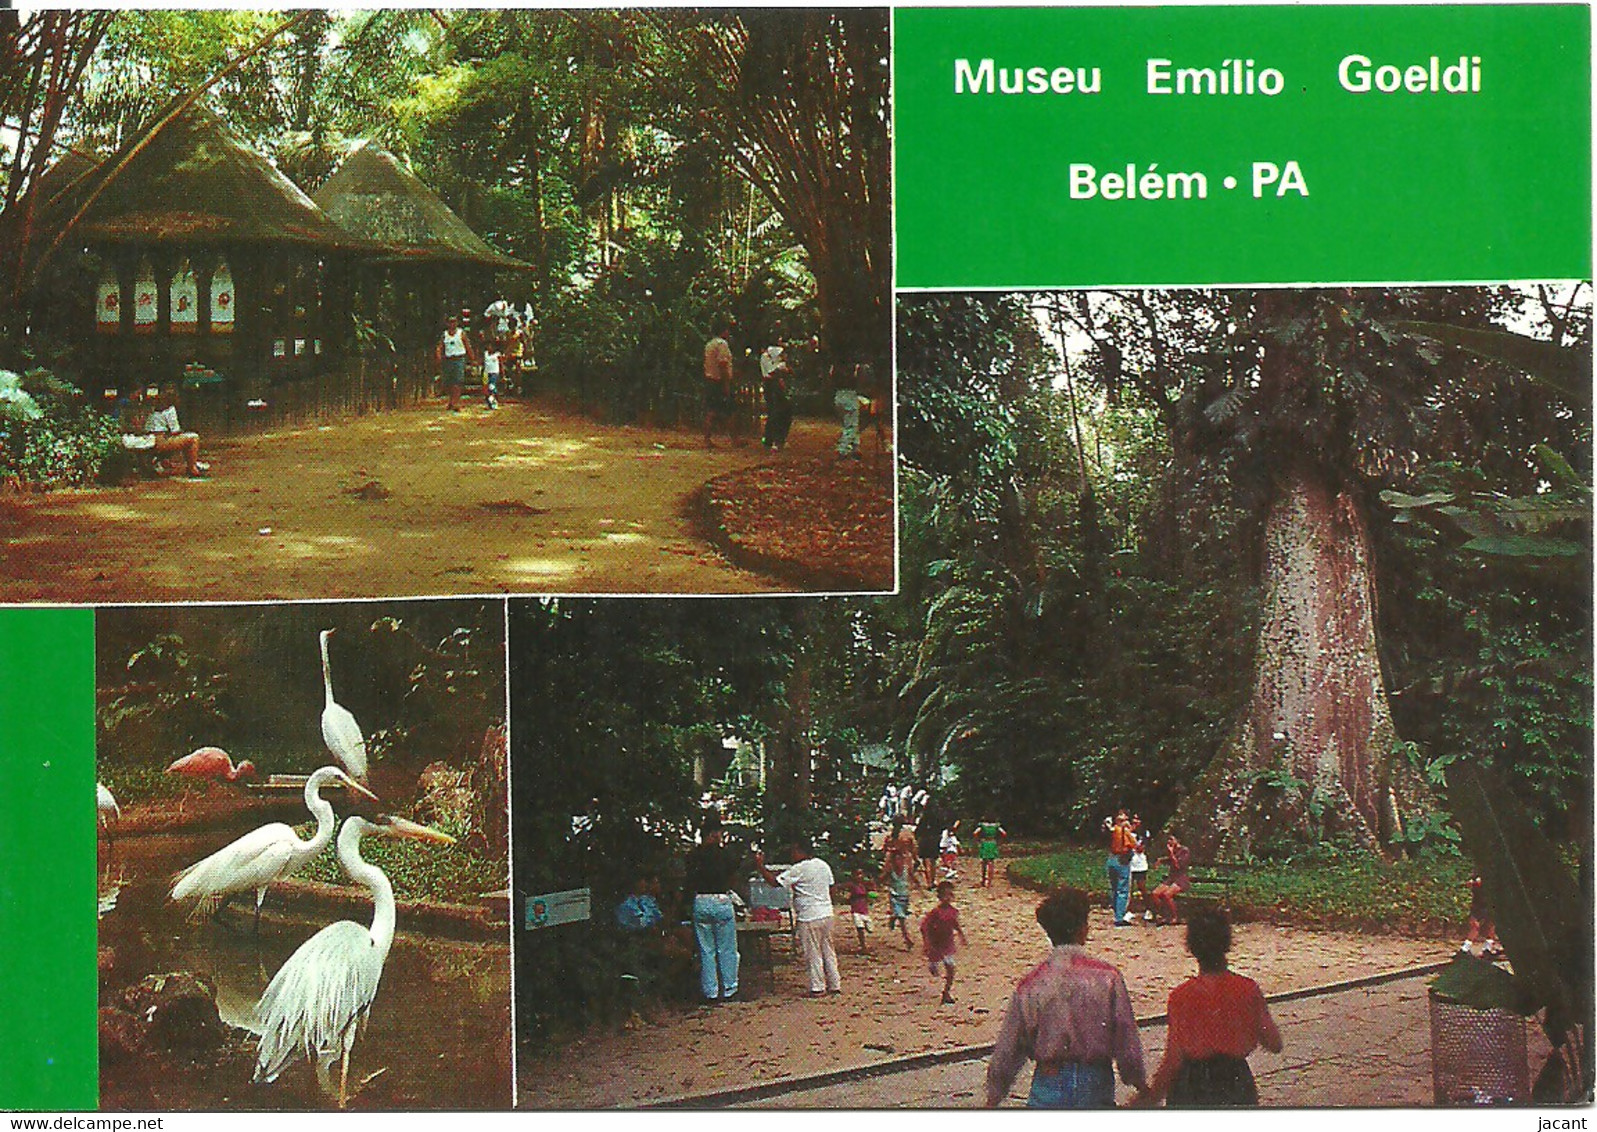 Brasil - Belem - Museu Emilio Goeldi - Belém